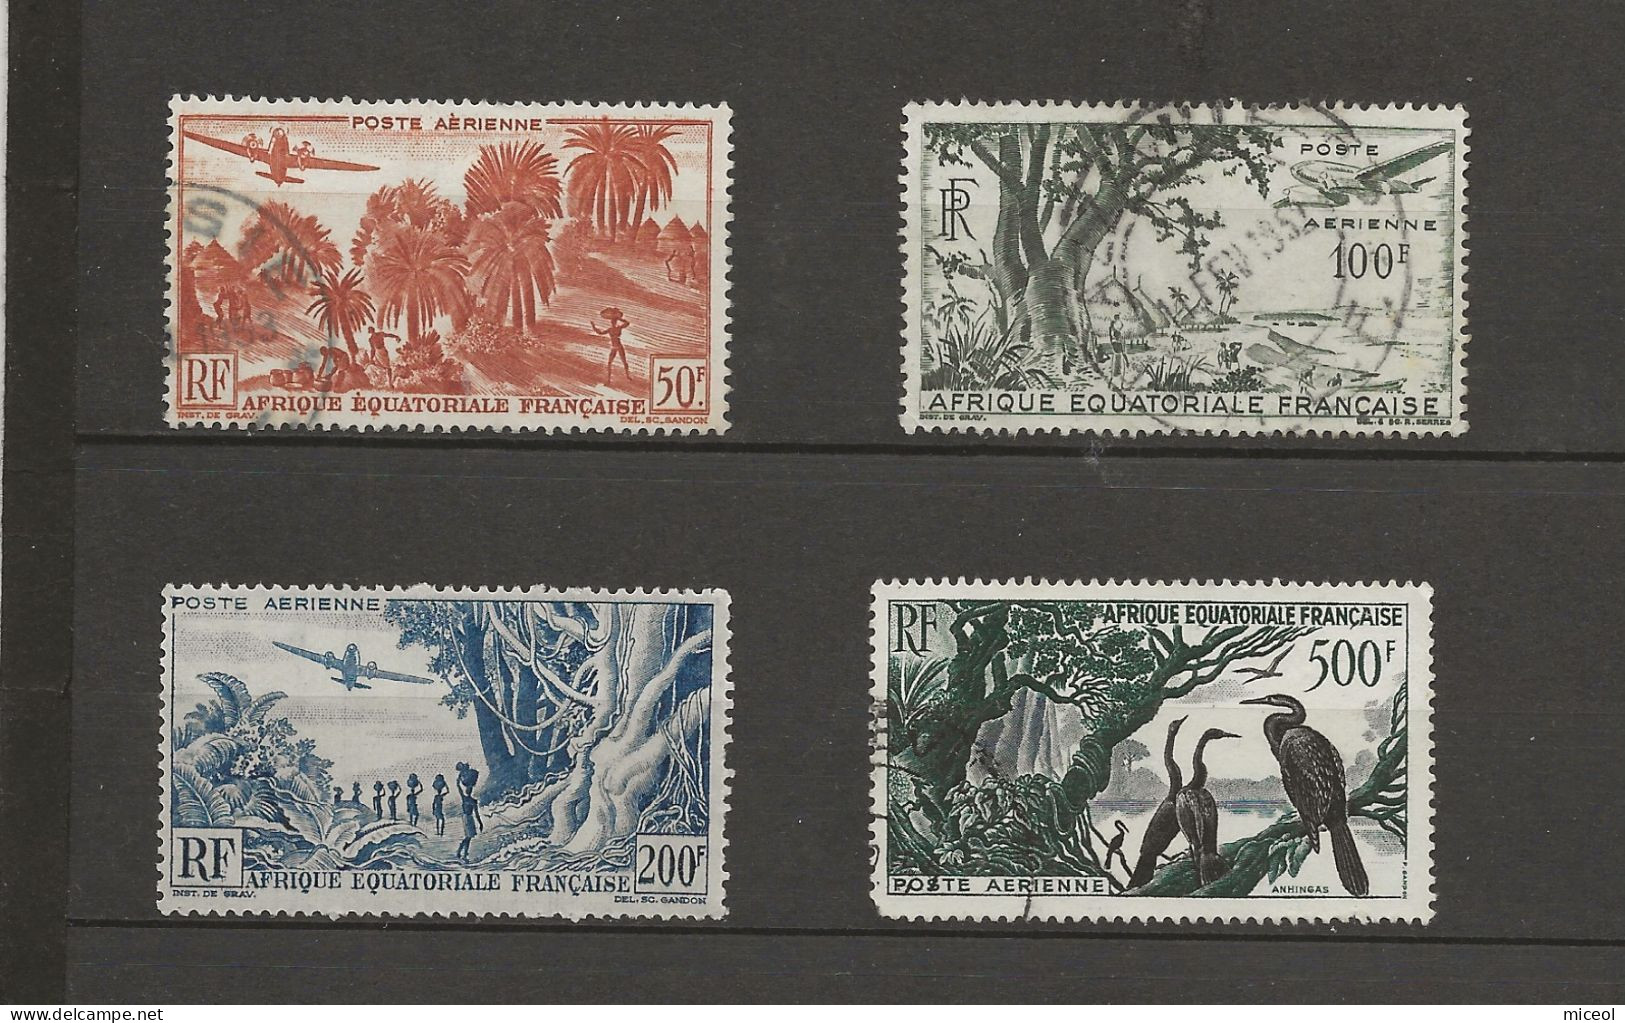 AFRIQUE EQUATORIALE FRANCAISE - POSTE AERIENNE - Used Stamps